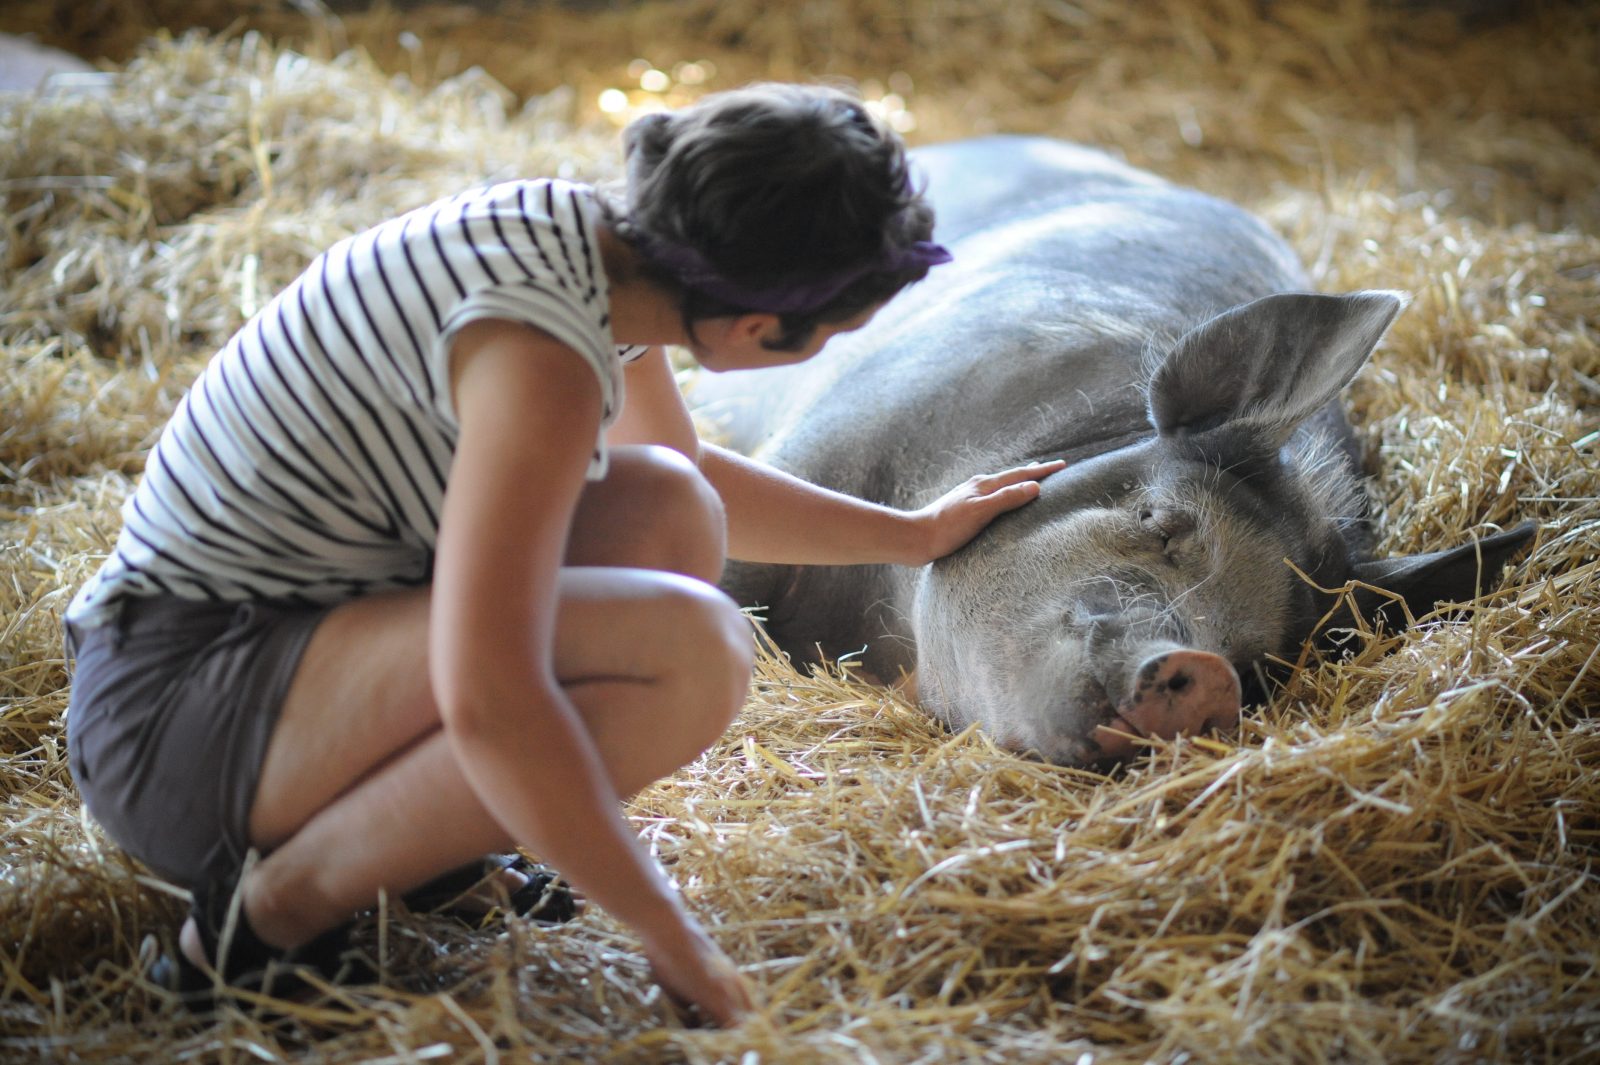 Guest with pig at Farm Sanctuary, credit Jo-Anne McArthur